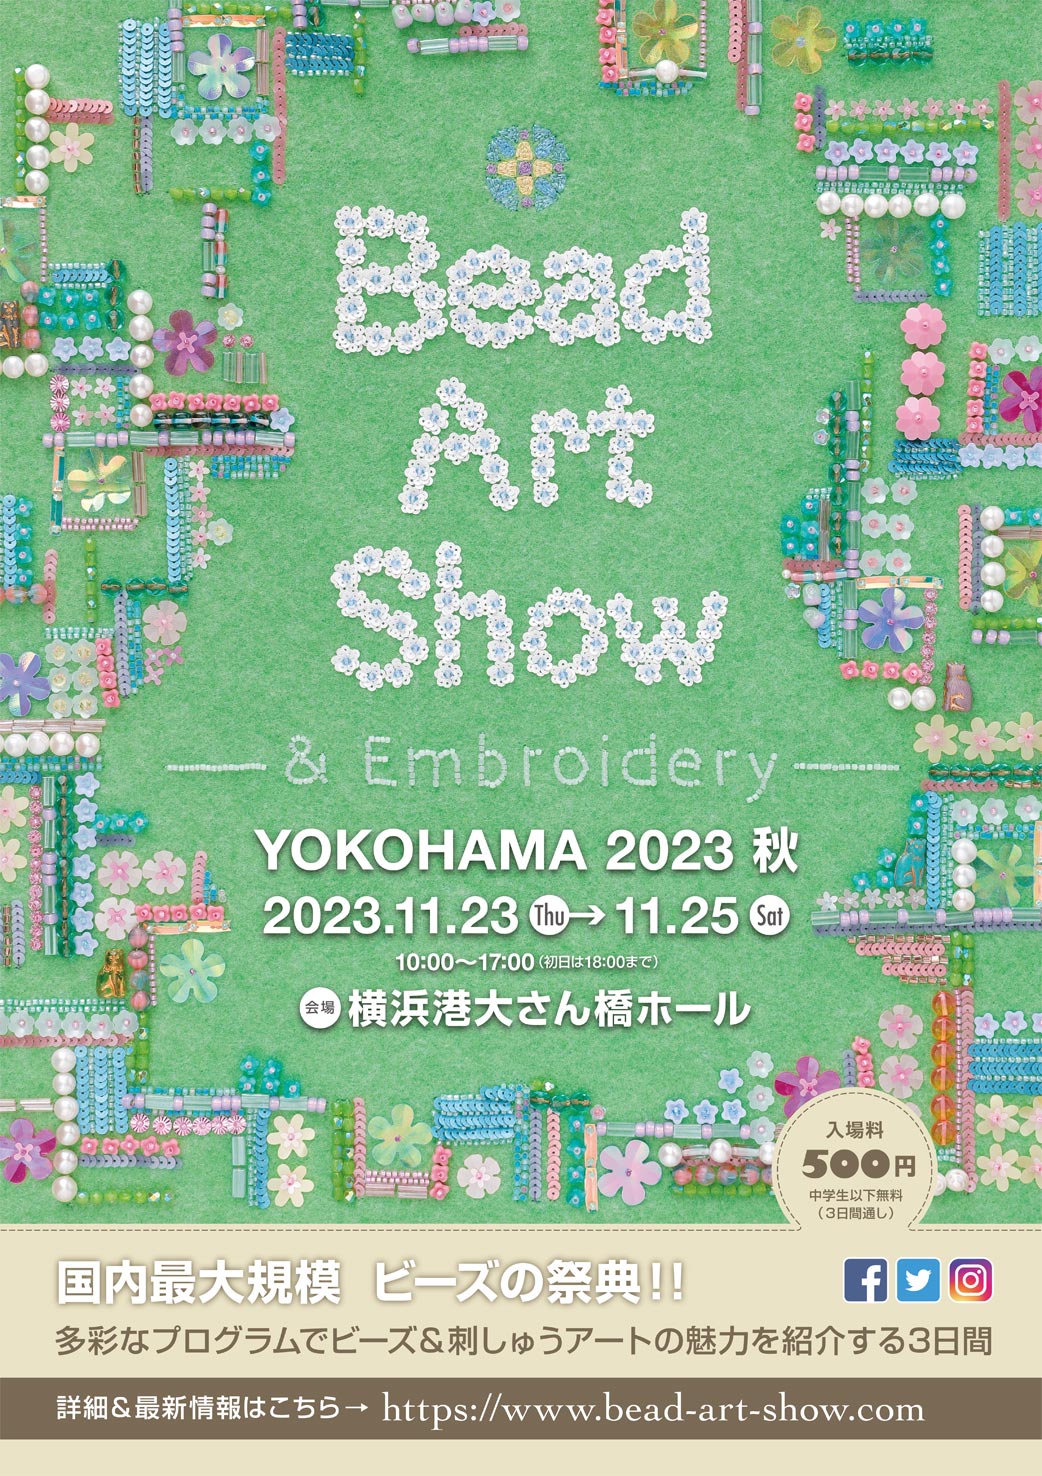 Bead Art Show -YOKOHAMA 2023 秋-